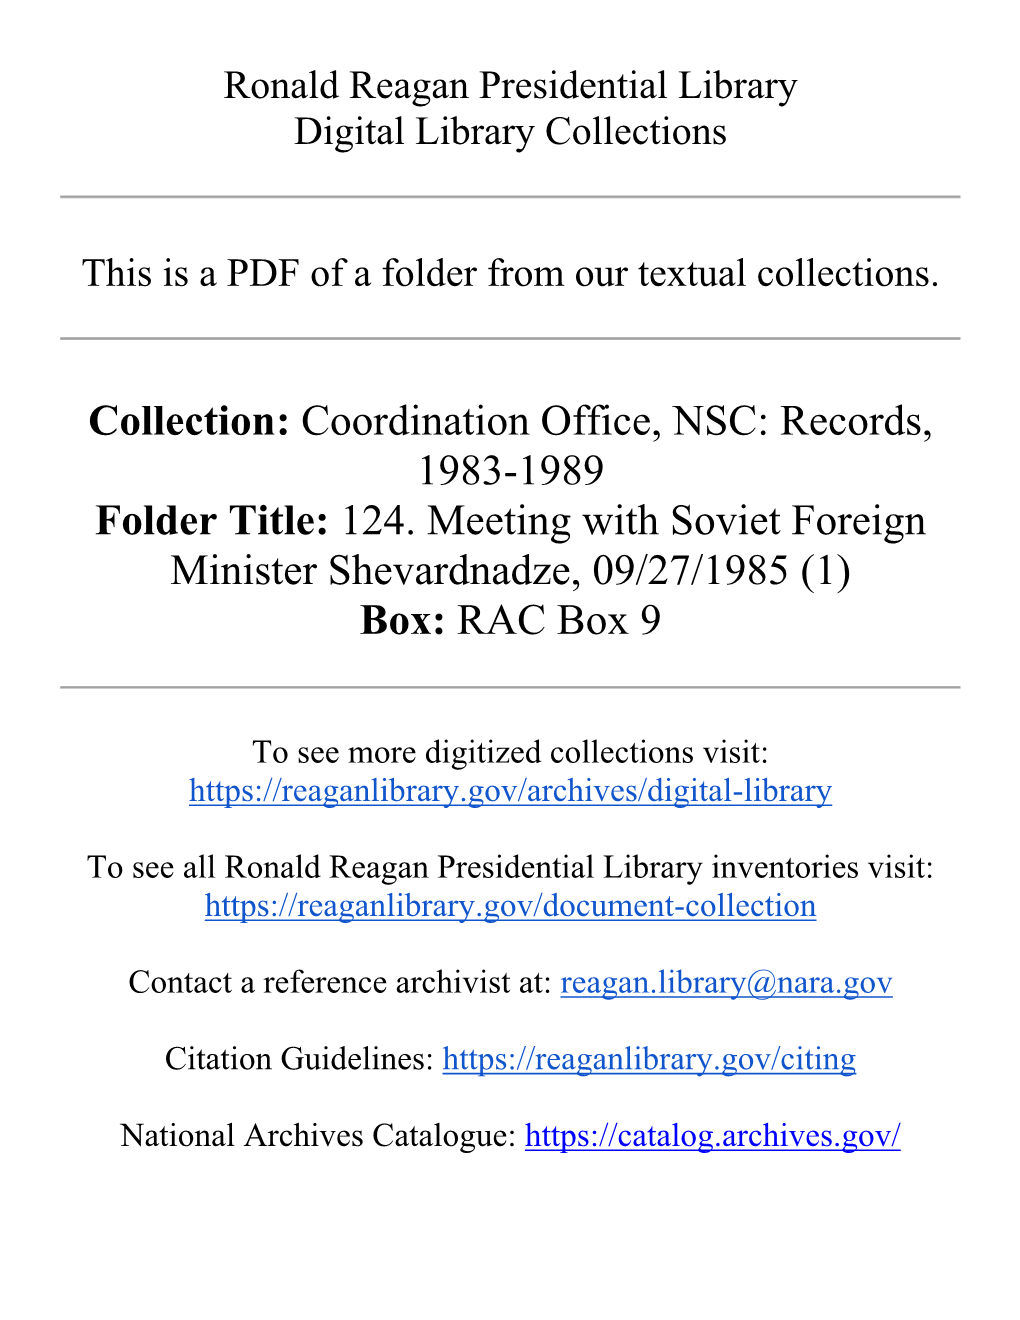 Coordination Office, NSC: Records, 1983-1989 Folder Title: 124